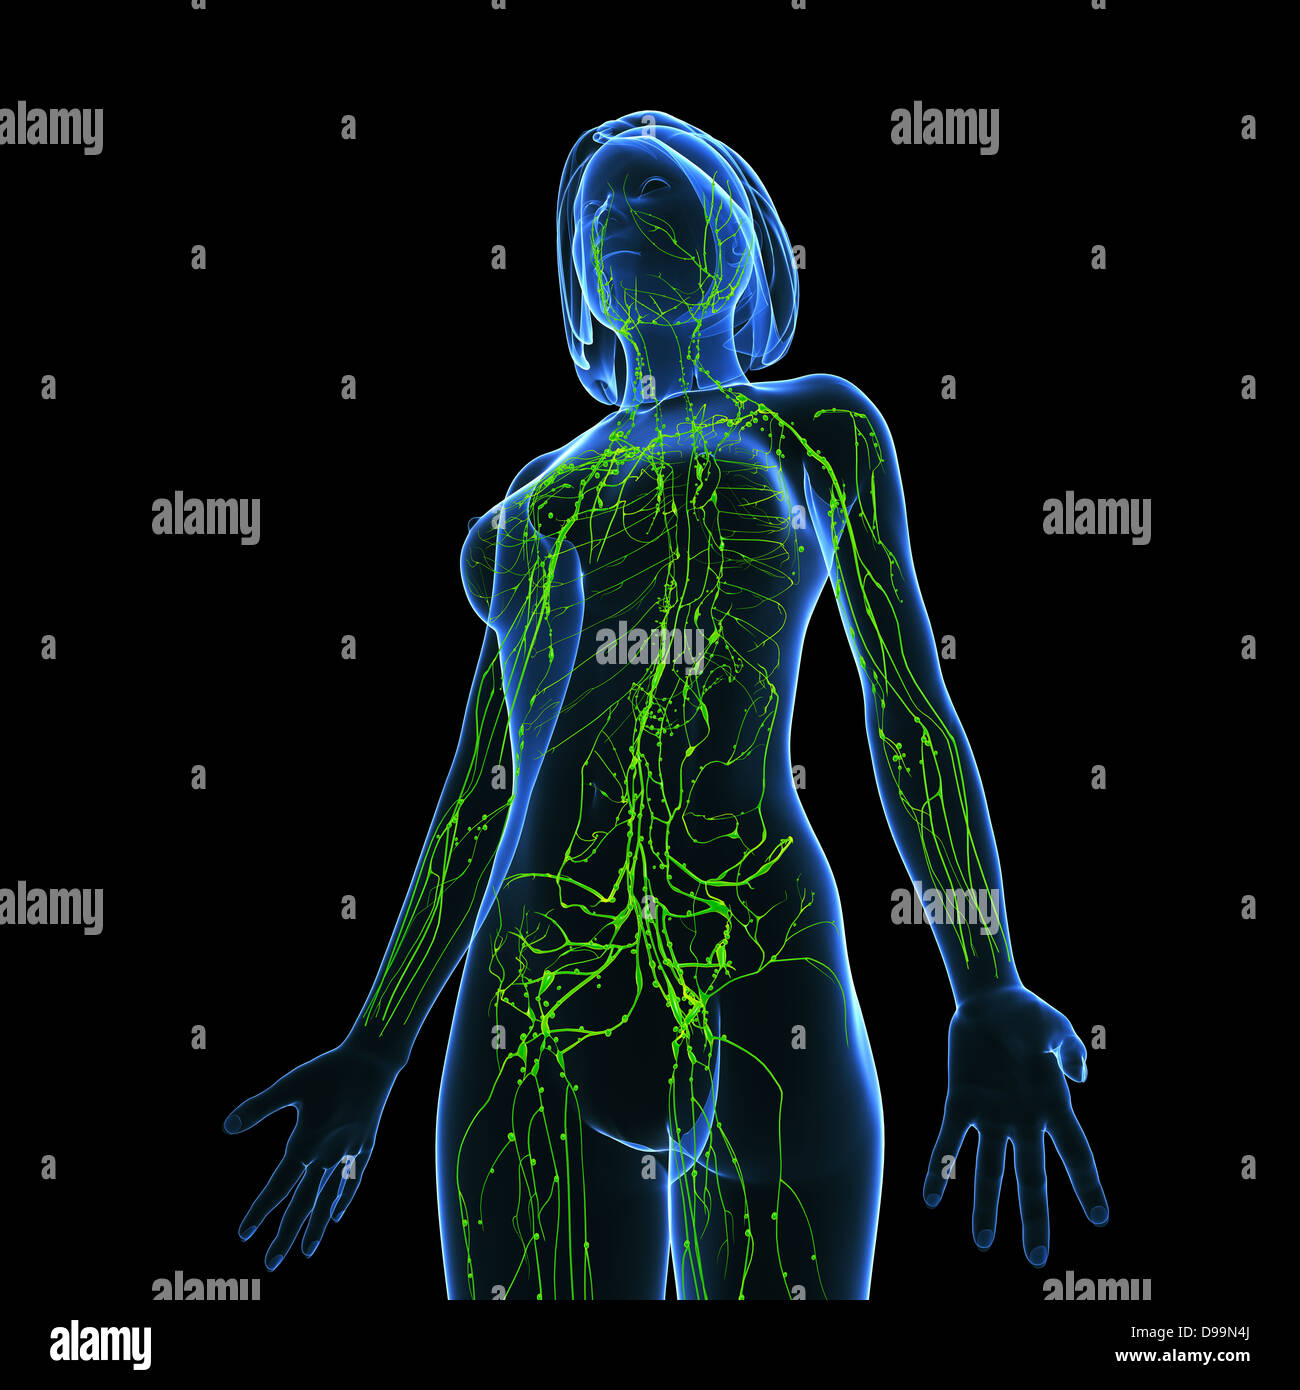 lymphatic system of female body anatomy Stock Photo